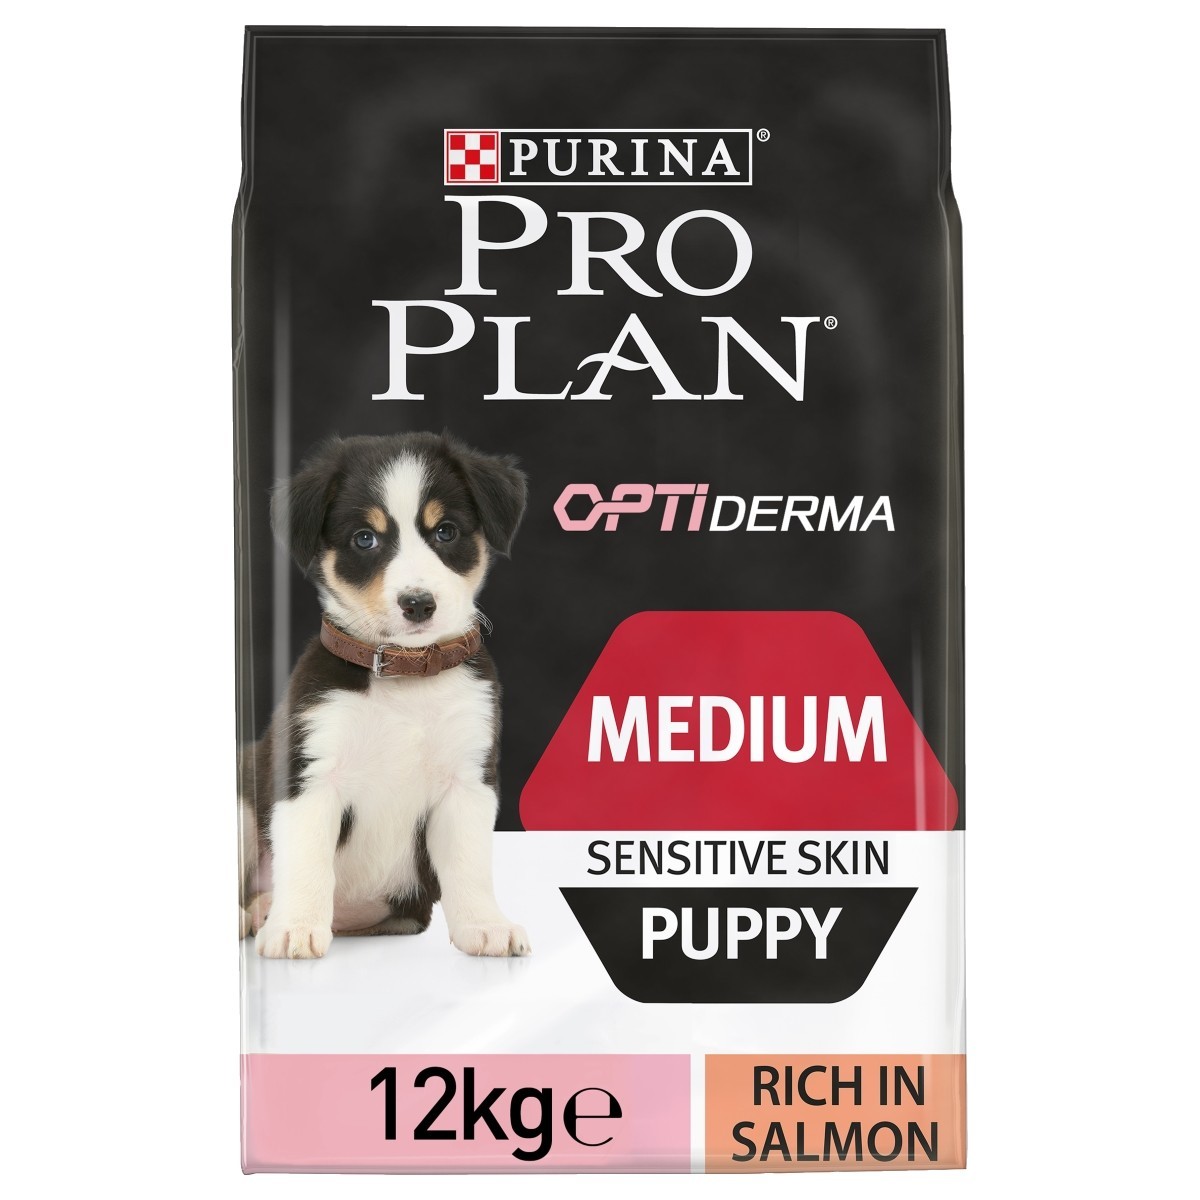 purina pro puppy food